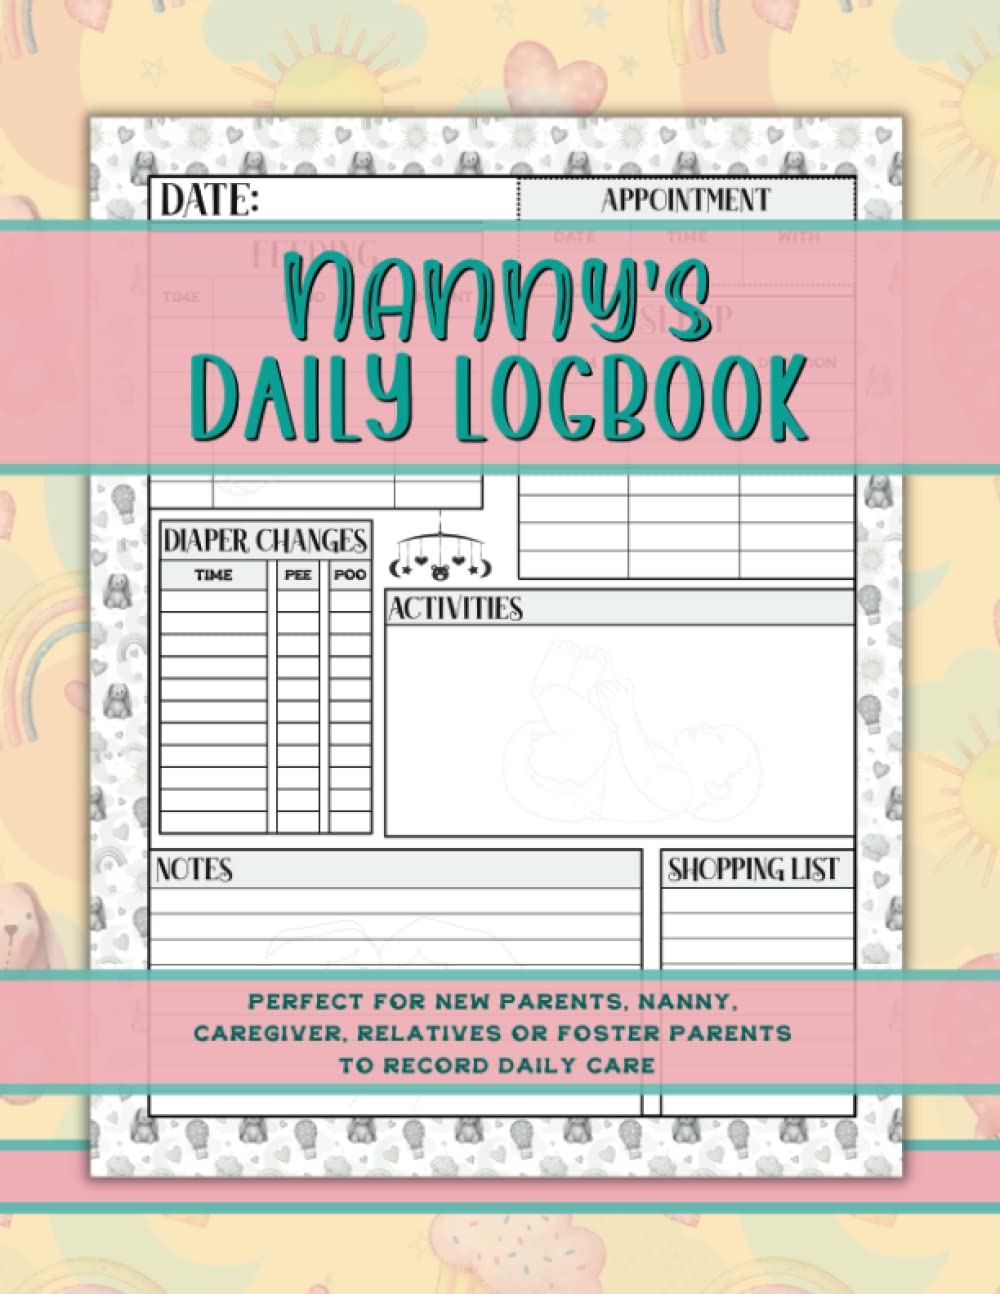 Nanny’s Daily Logbook